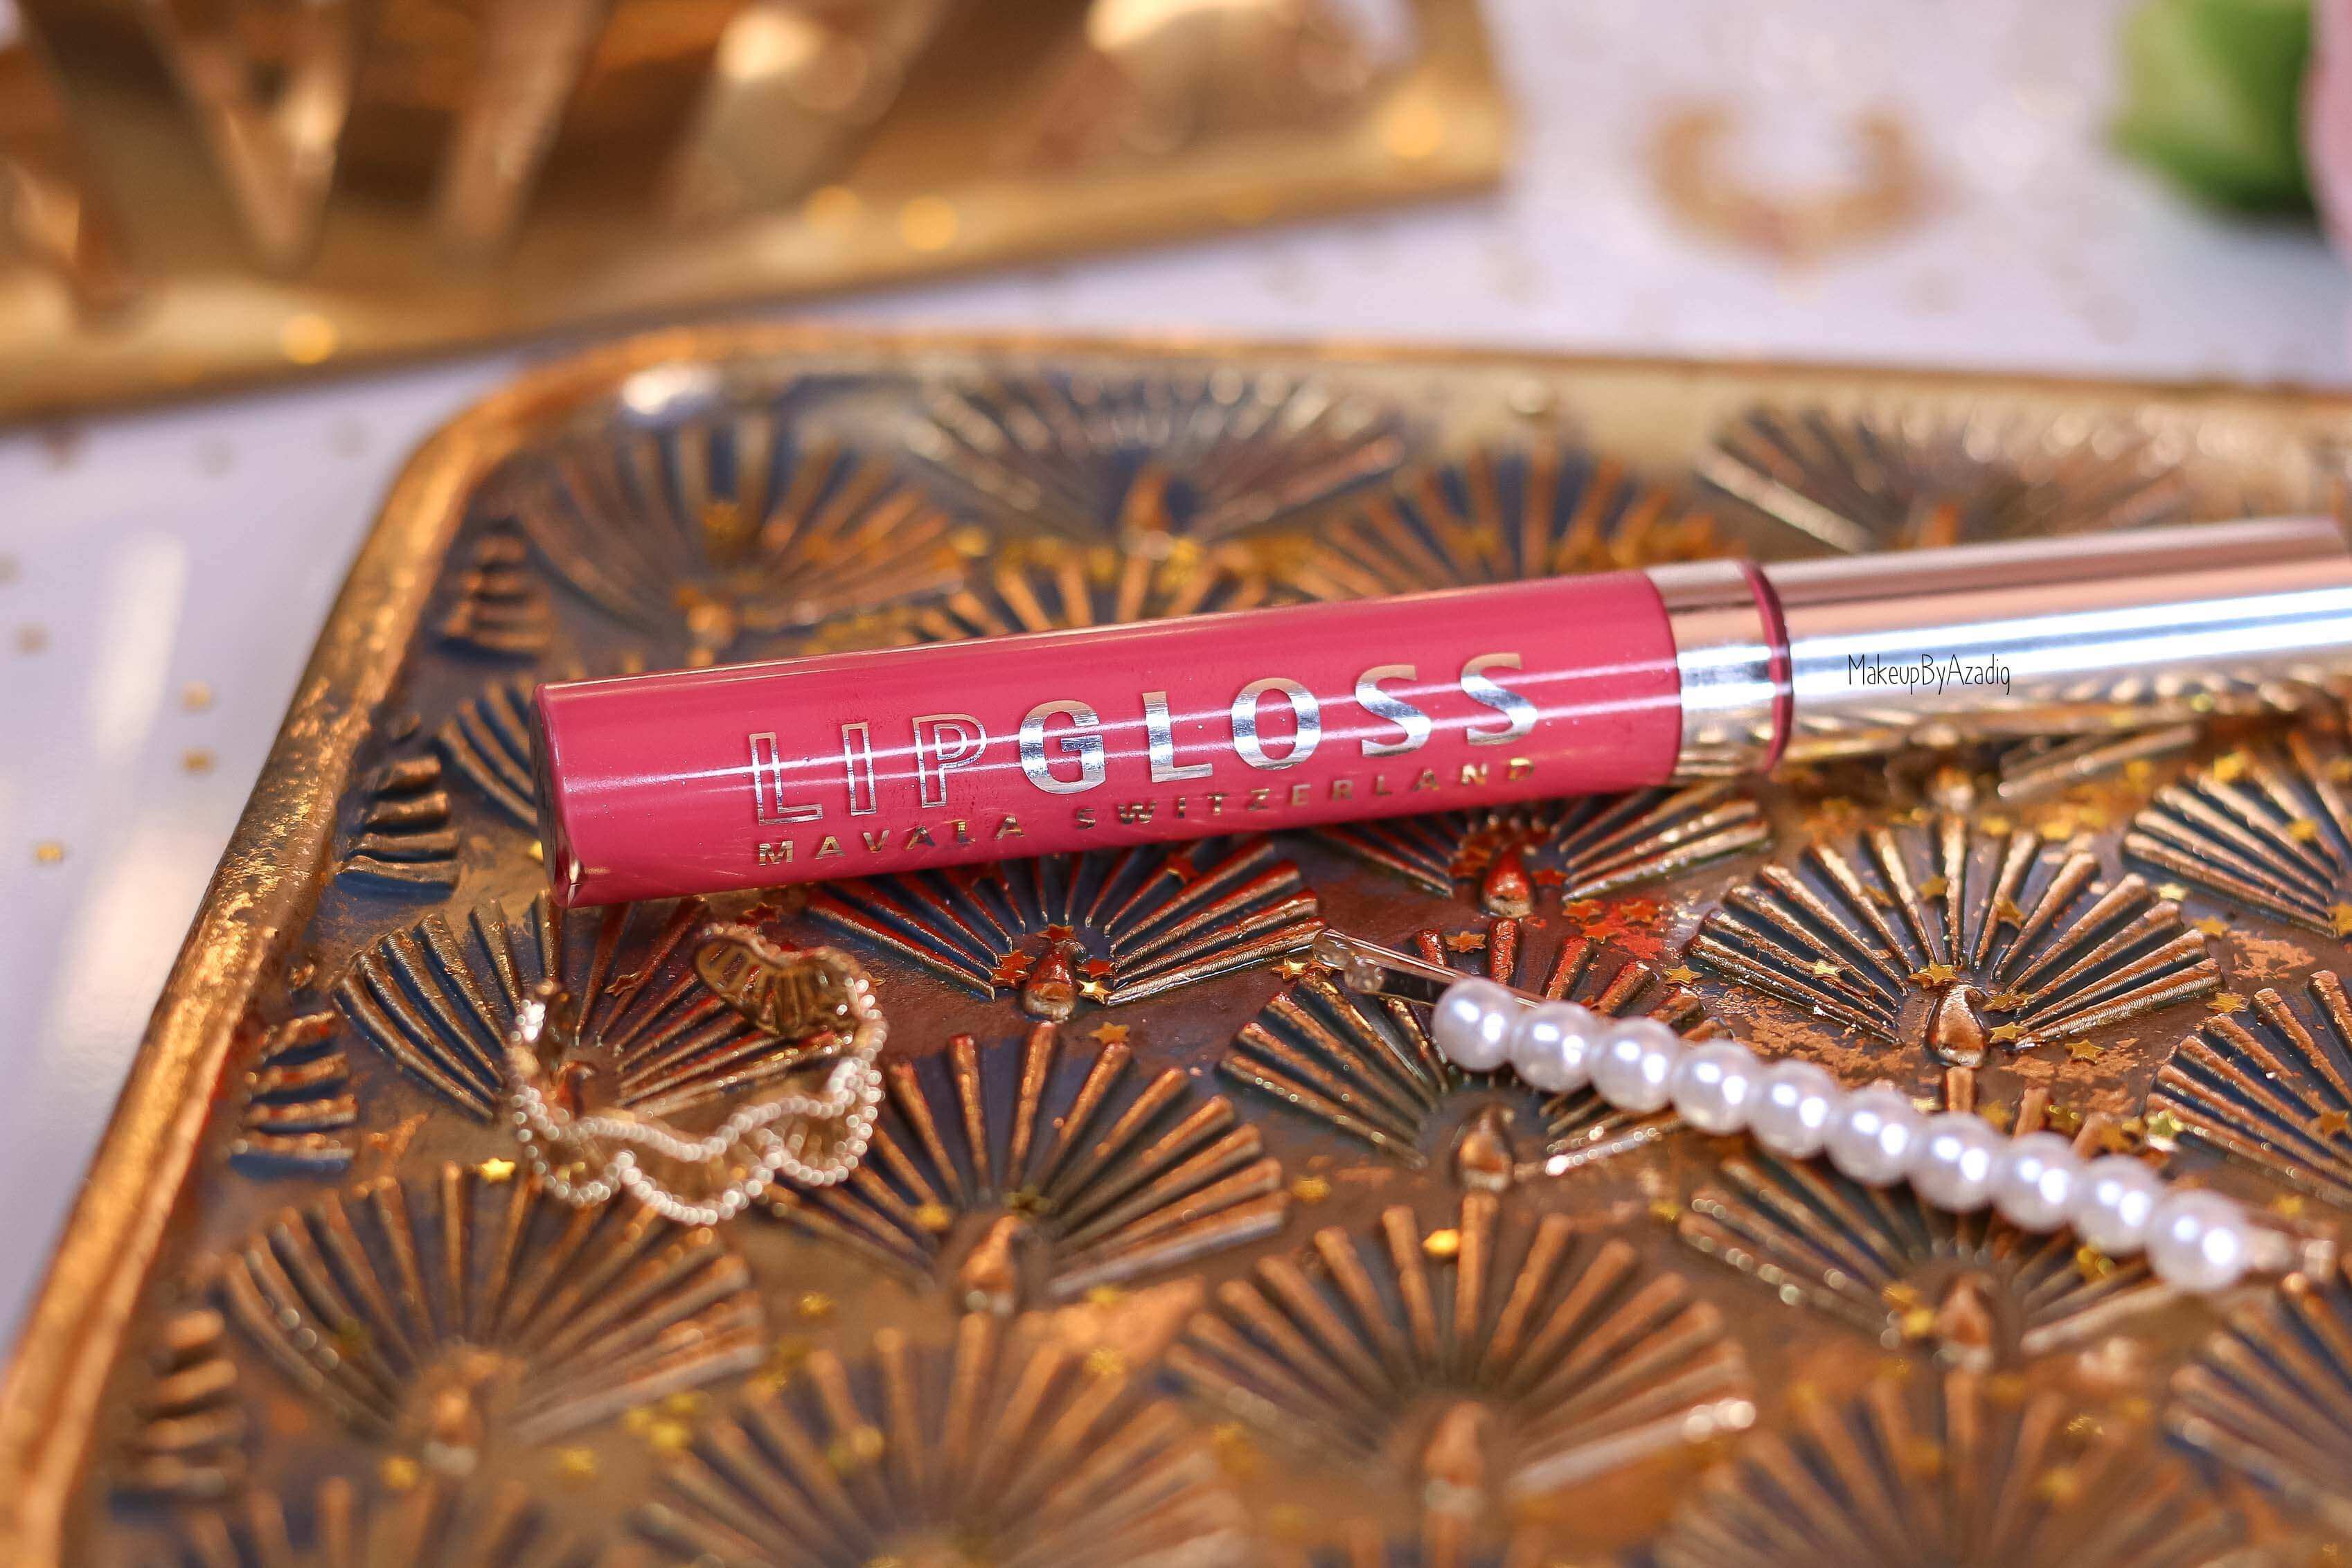 revue-lip-gloss-mavala-sugar-free-collection-meilleur-gloss-levres-lipgloss-rose-rouge-brillant-makeupbyazadig-avis-prix-swatch-nude